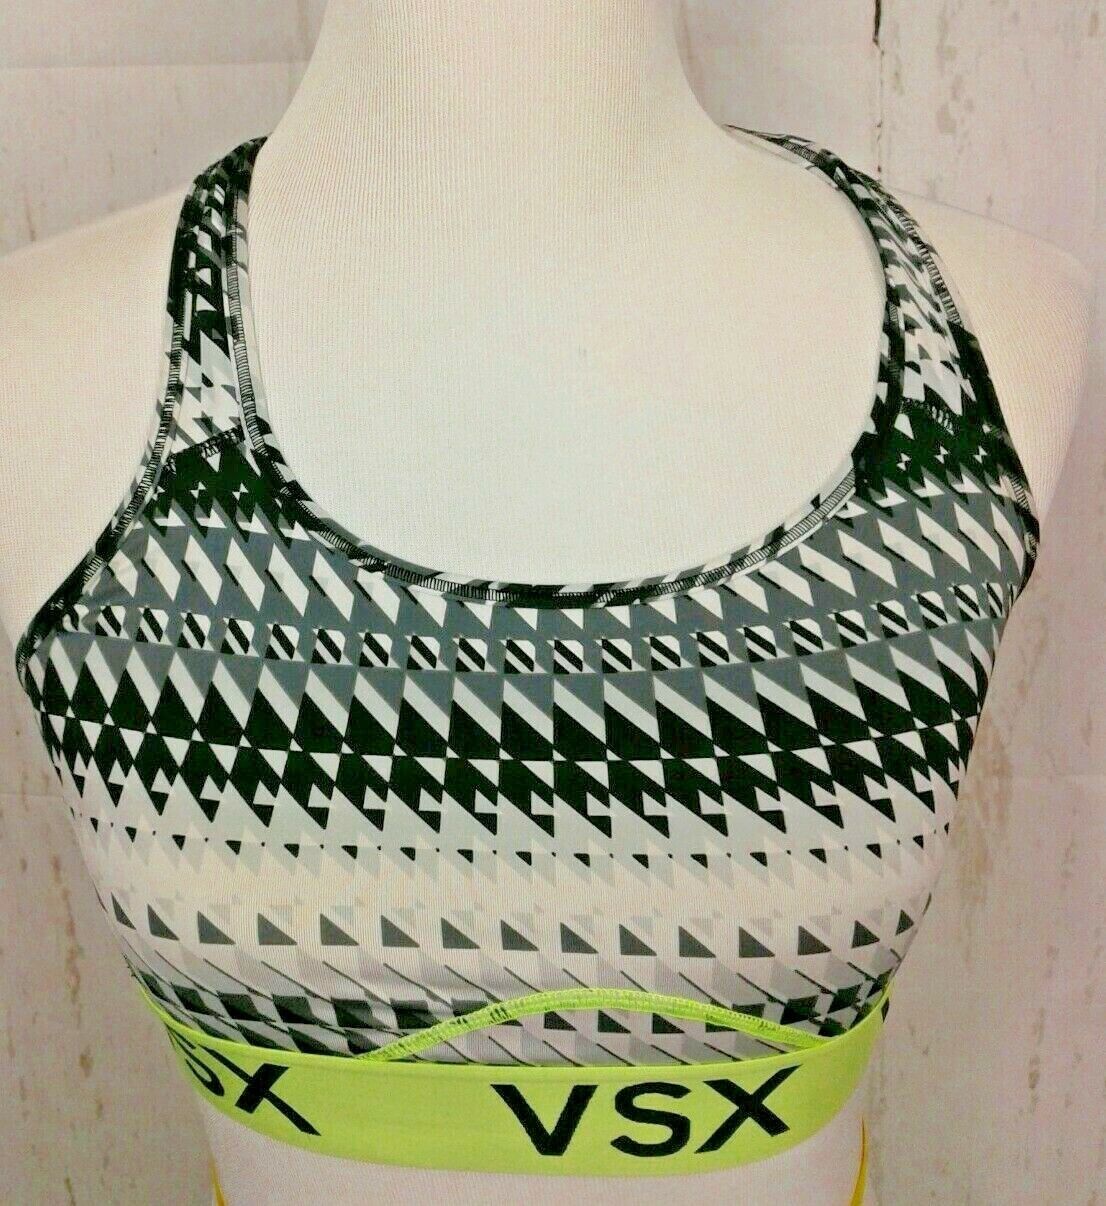 Victoria's Secret Sports Bra VSX Green Black White Design Lightweight Sz S - $11.88